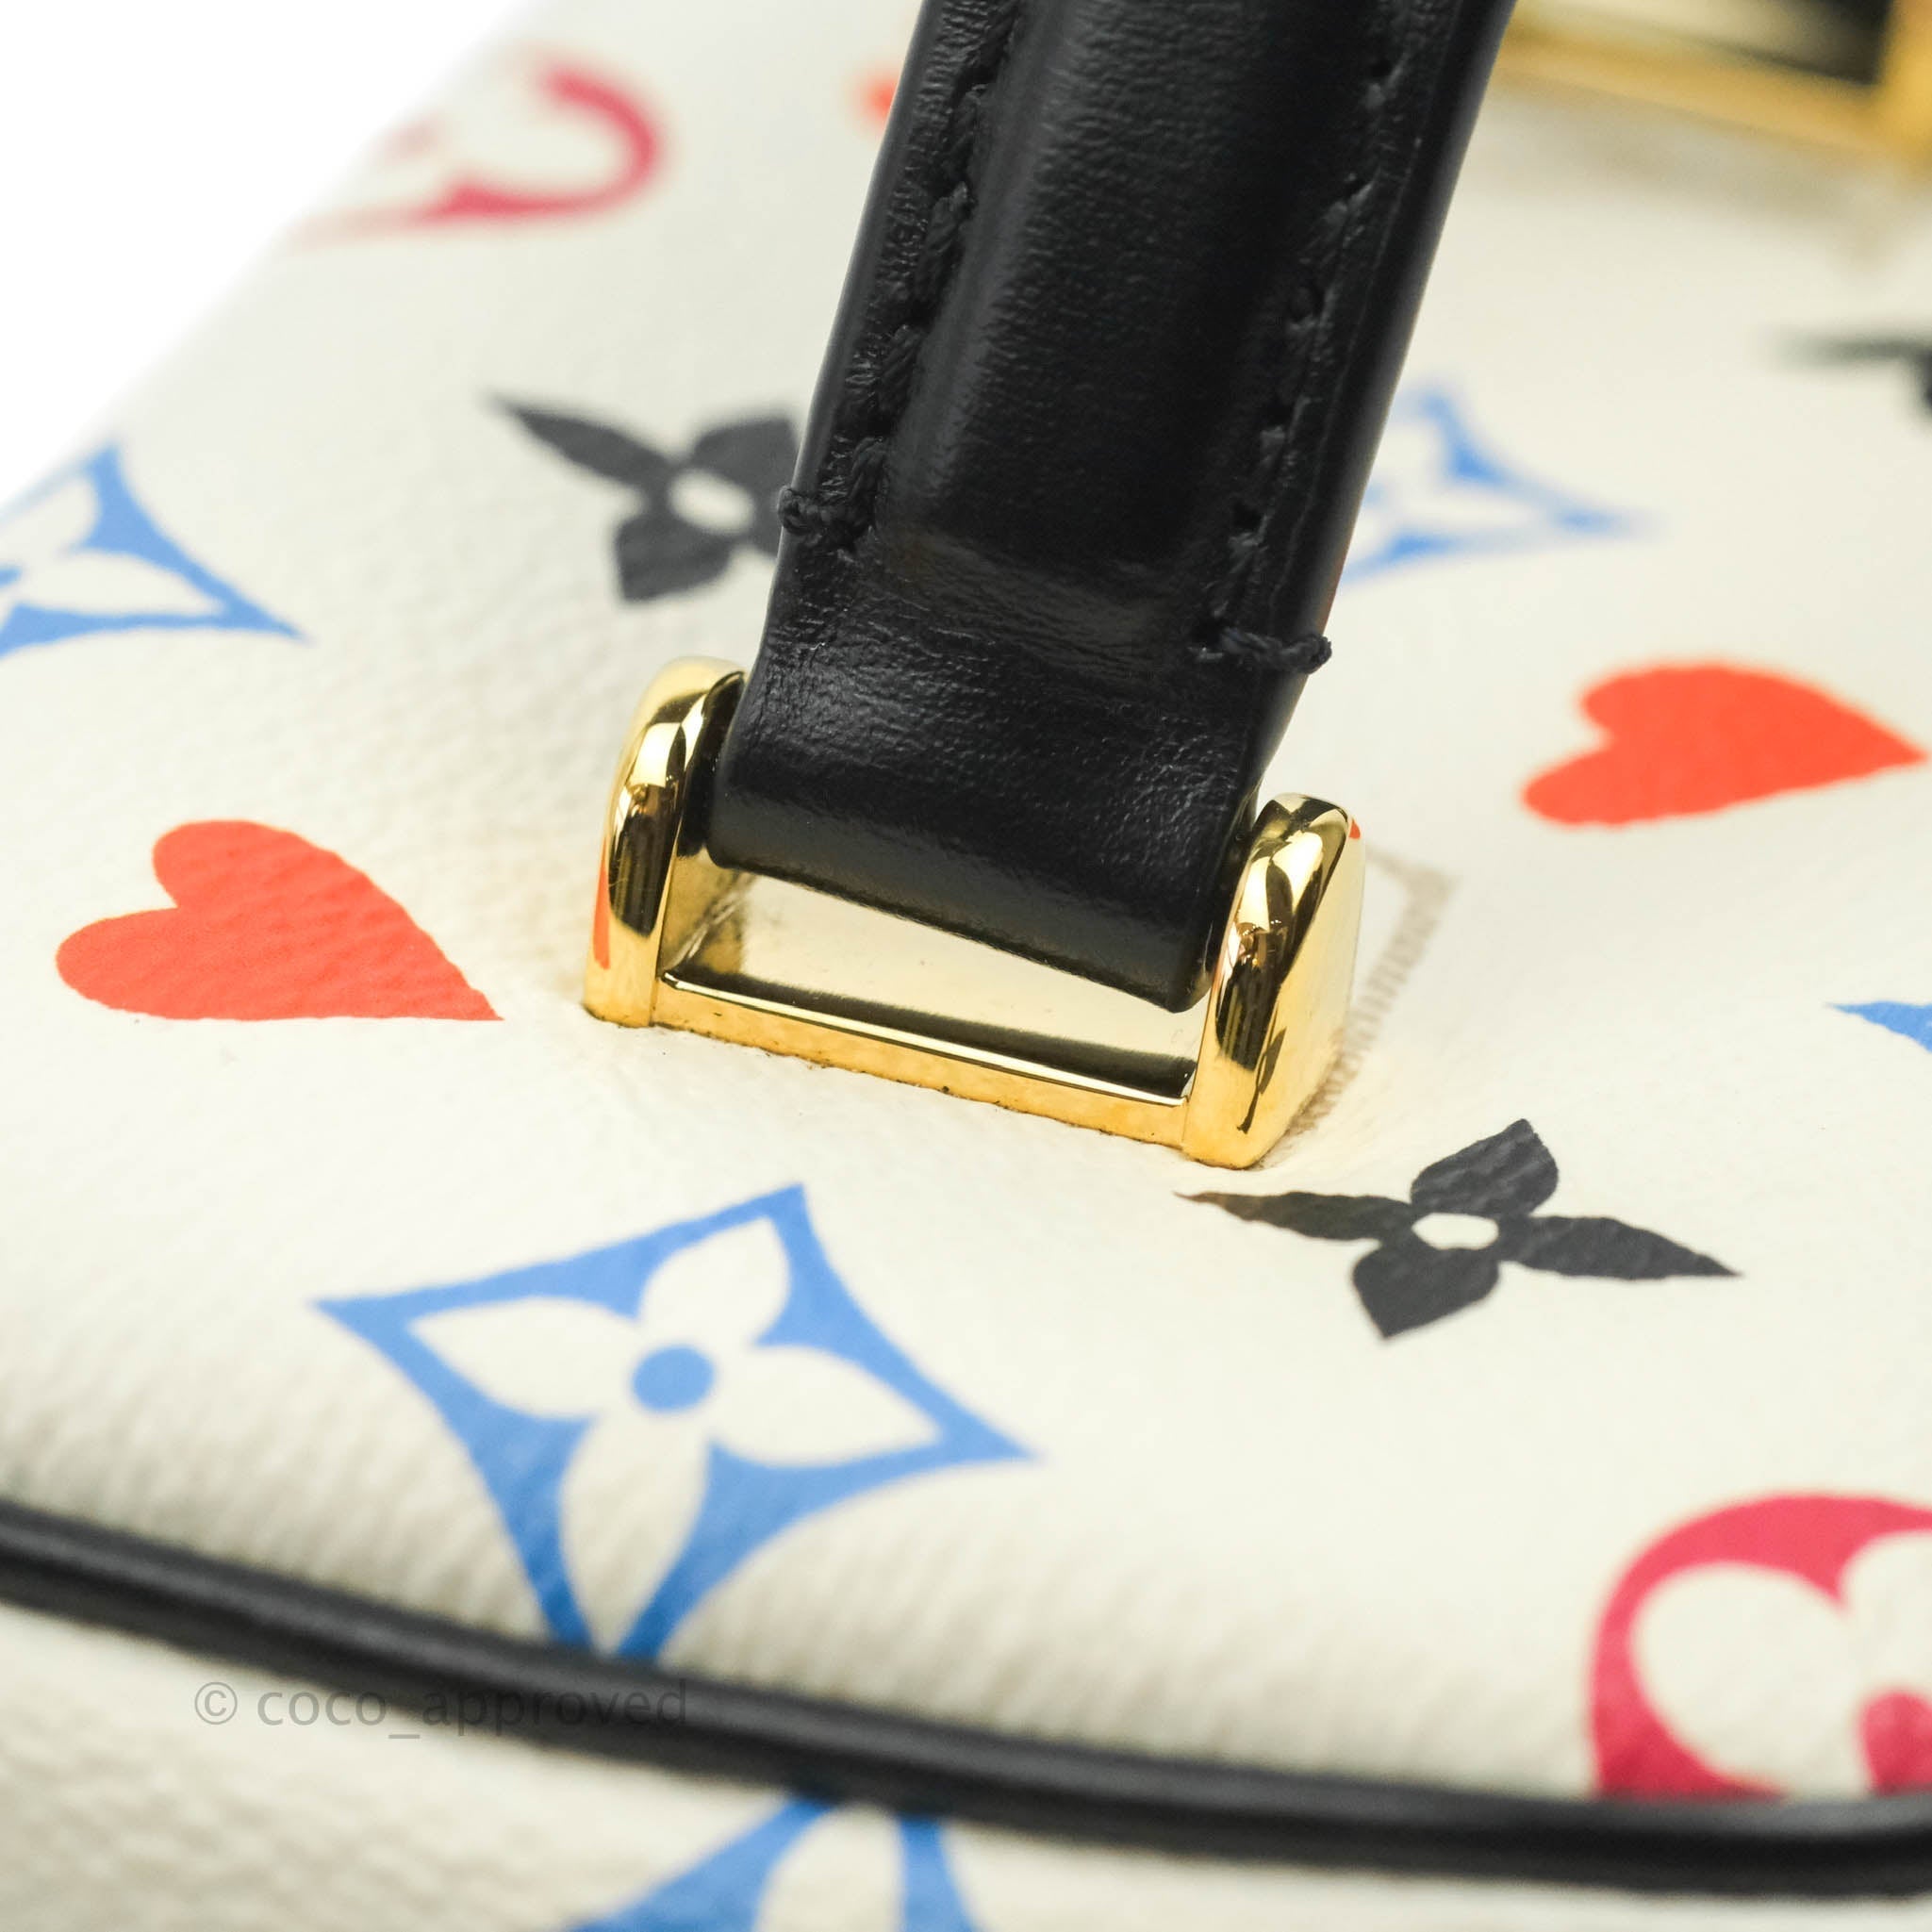 Louis Vuitton Game On Vanity PM White Heart Monogram LV Top Handle